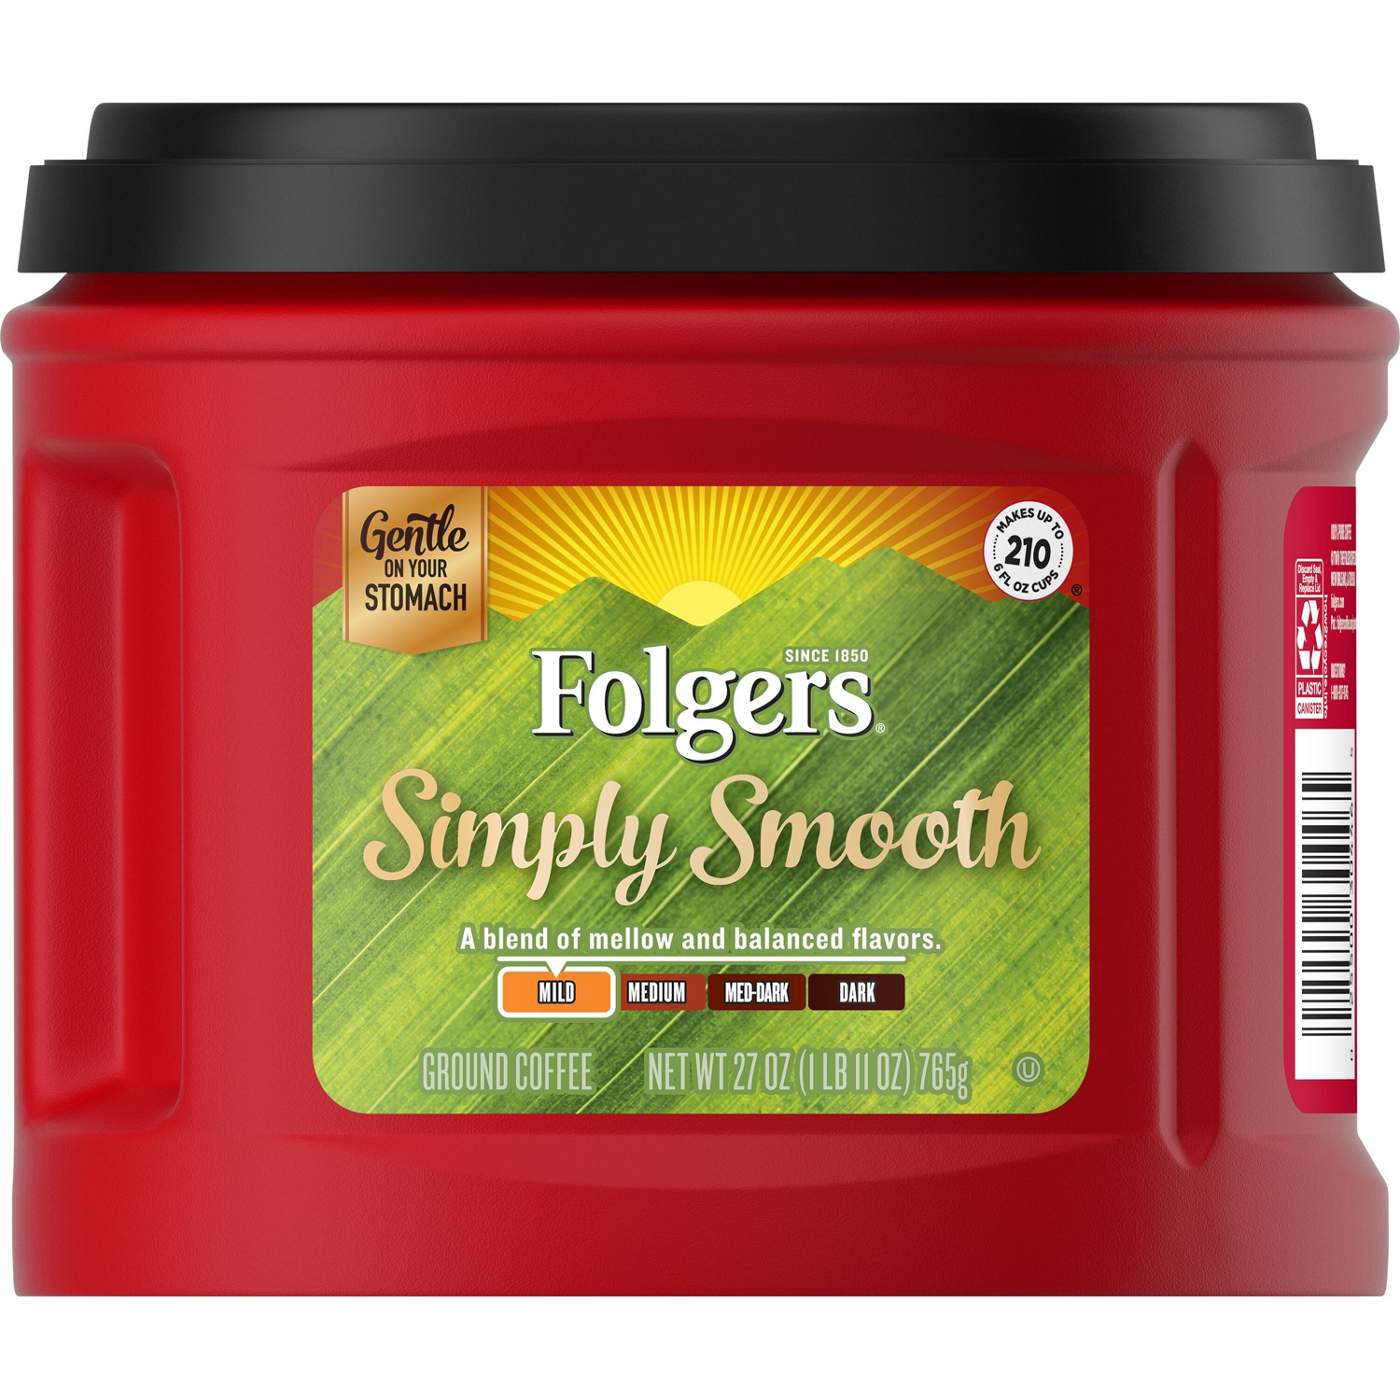 Folgers Simply Smooth Mild Roast Ground Coffee; image 1 of 2